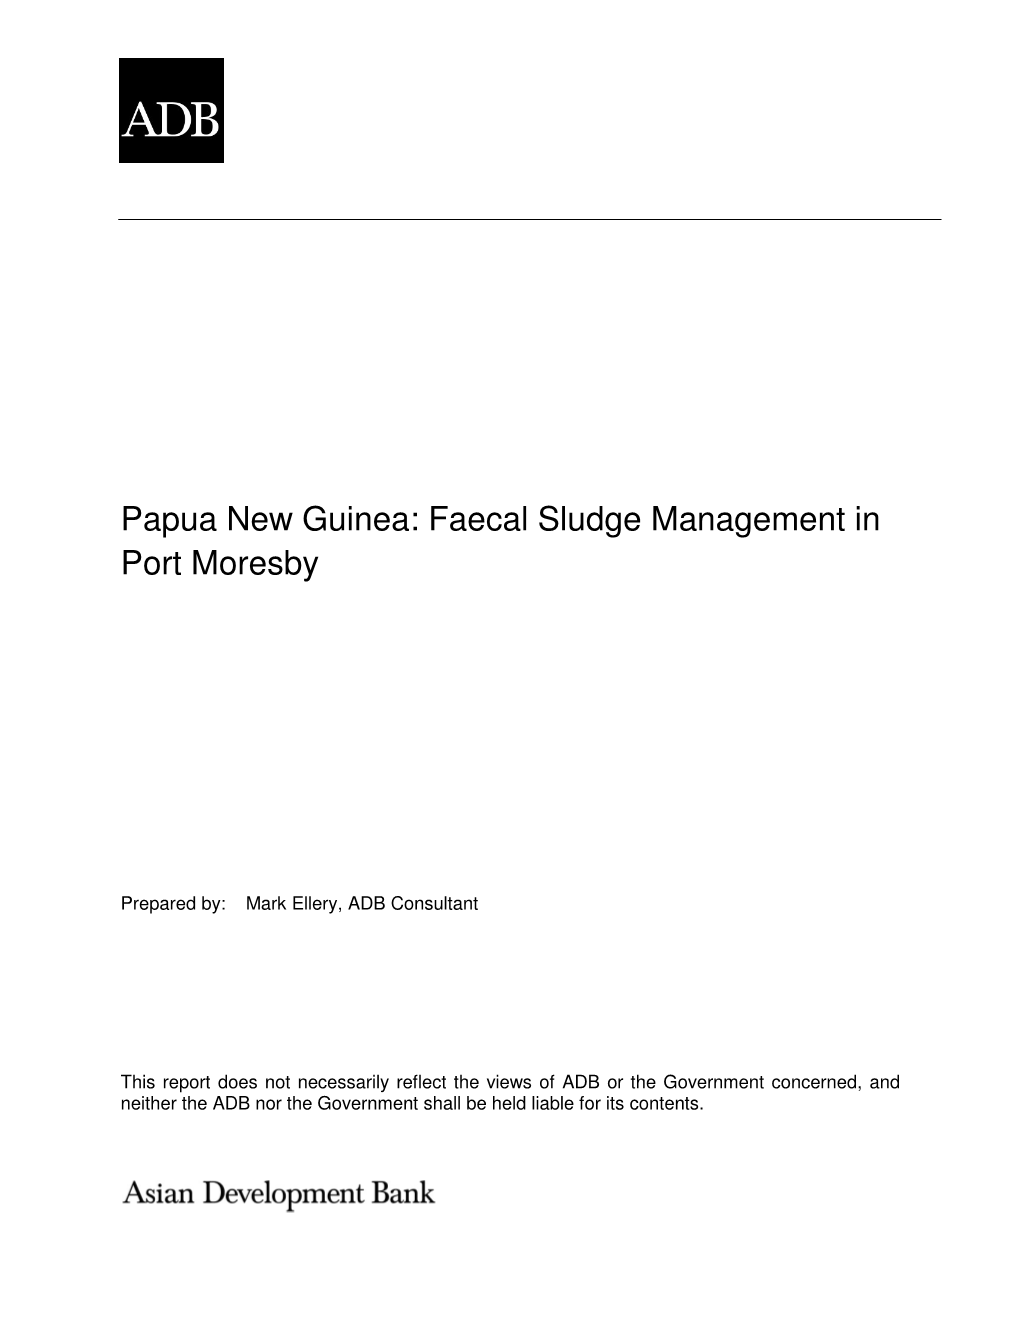 Papua New Guinea: Faecal Sludge Management in Port Moresby